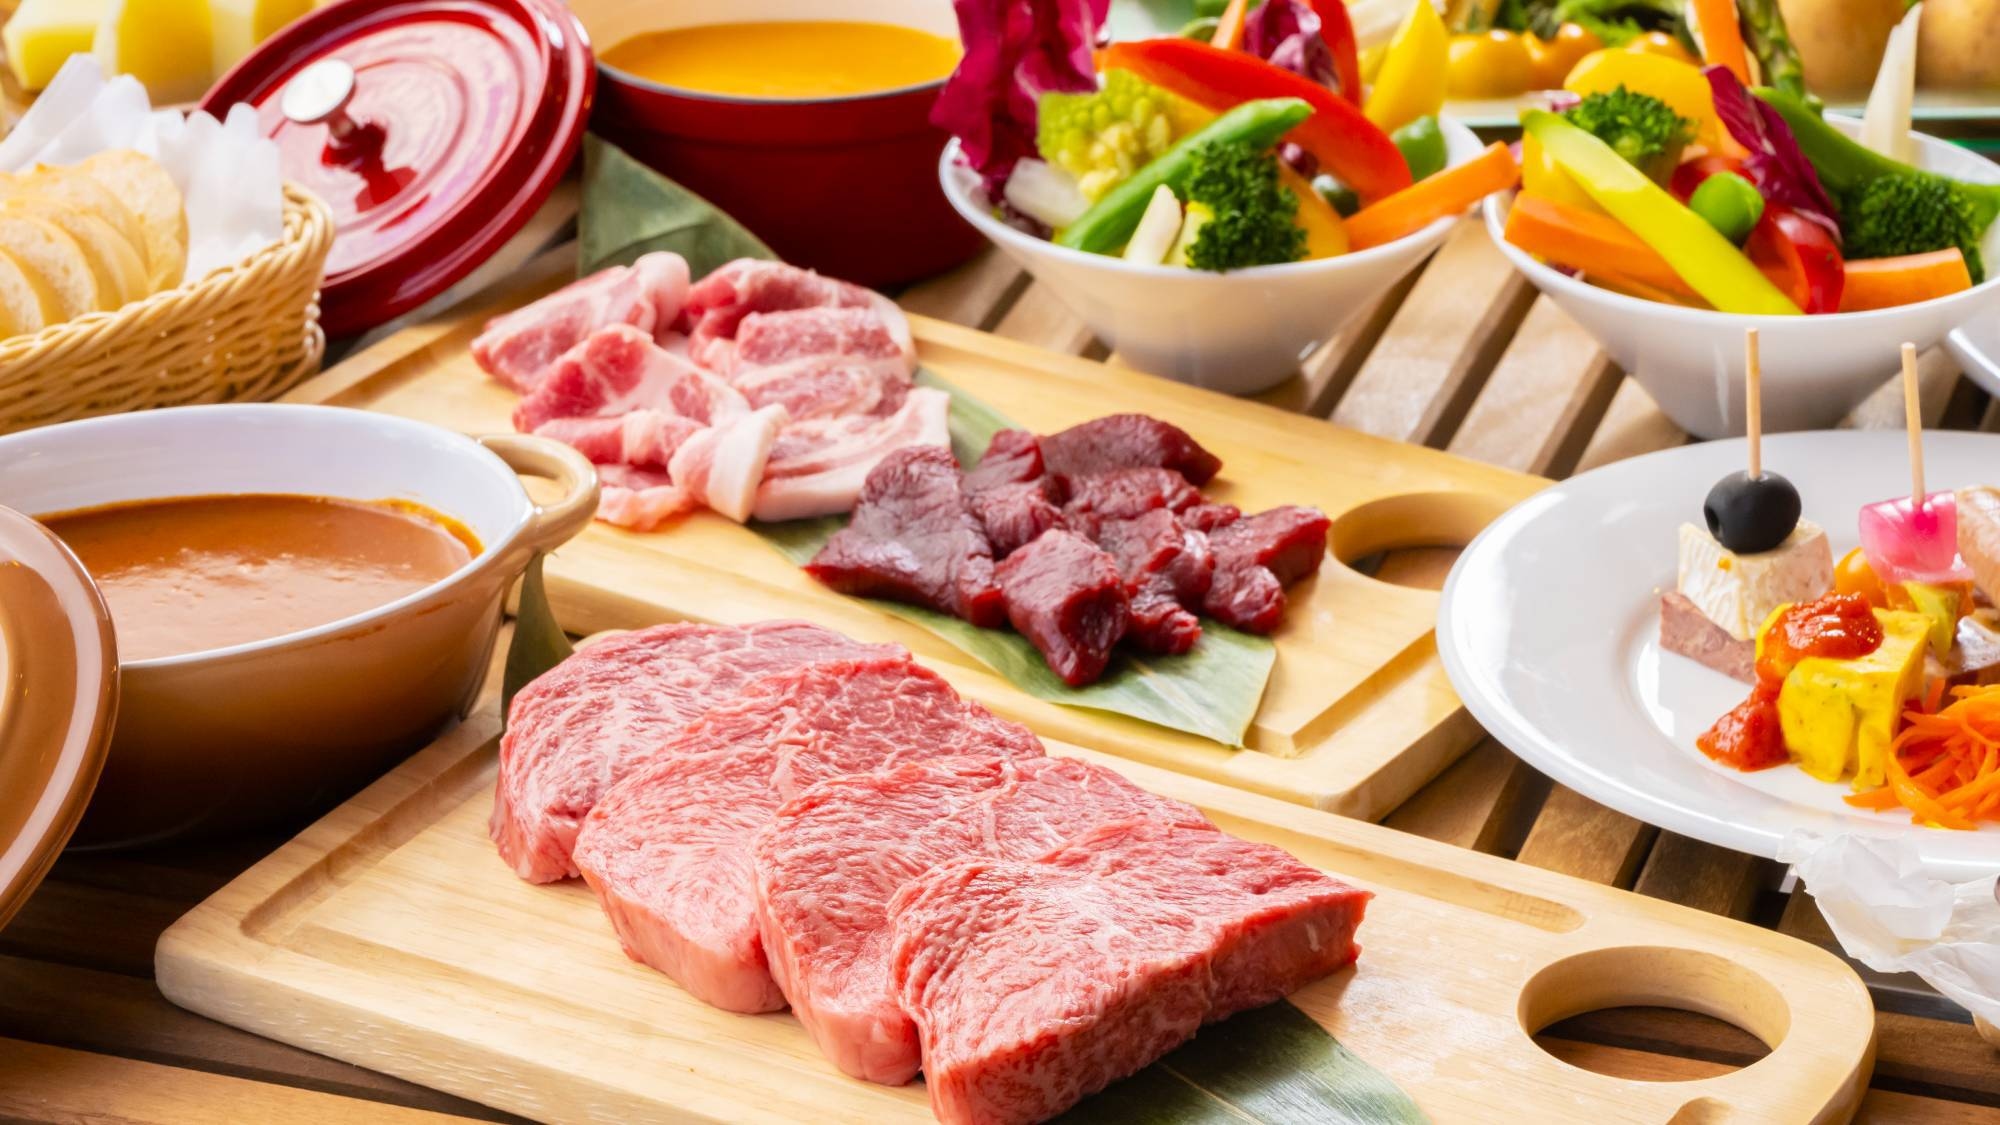 【BBQ-プレミアム-】『ブランド肉』×『ぎふジビエ』旬の幸と厳選食材で彩る、贅沢BBQ